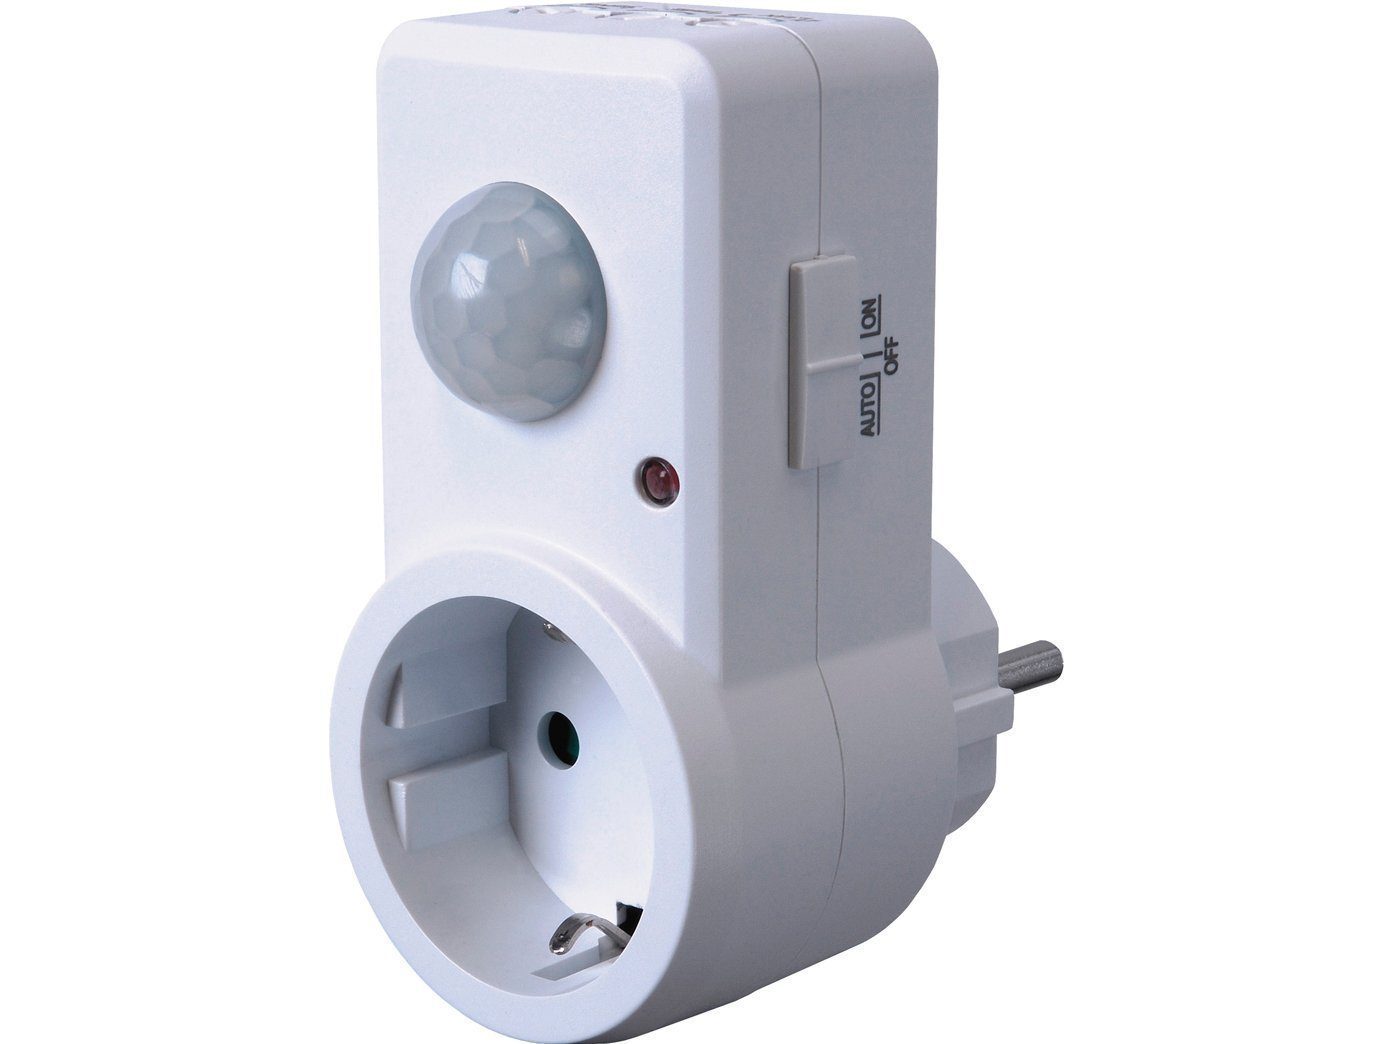 ES360P smartwares mit Plug-In Zwischenschalter Stecker Infrarotsensor, 1-St. 120°, Steckdosenschalter